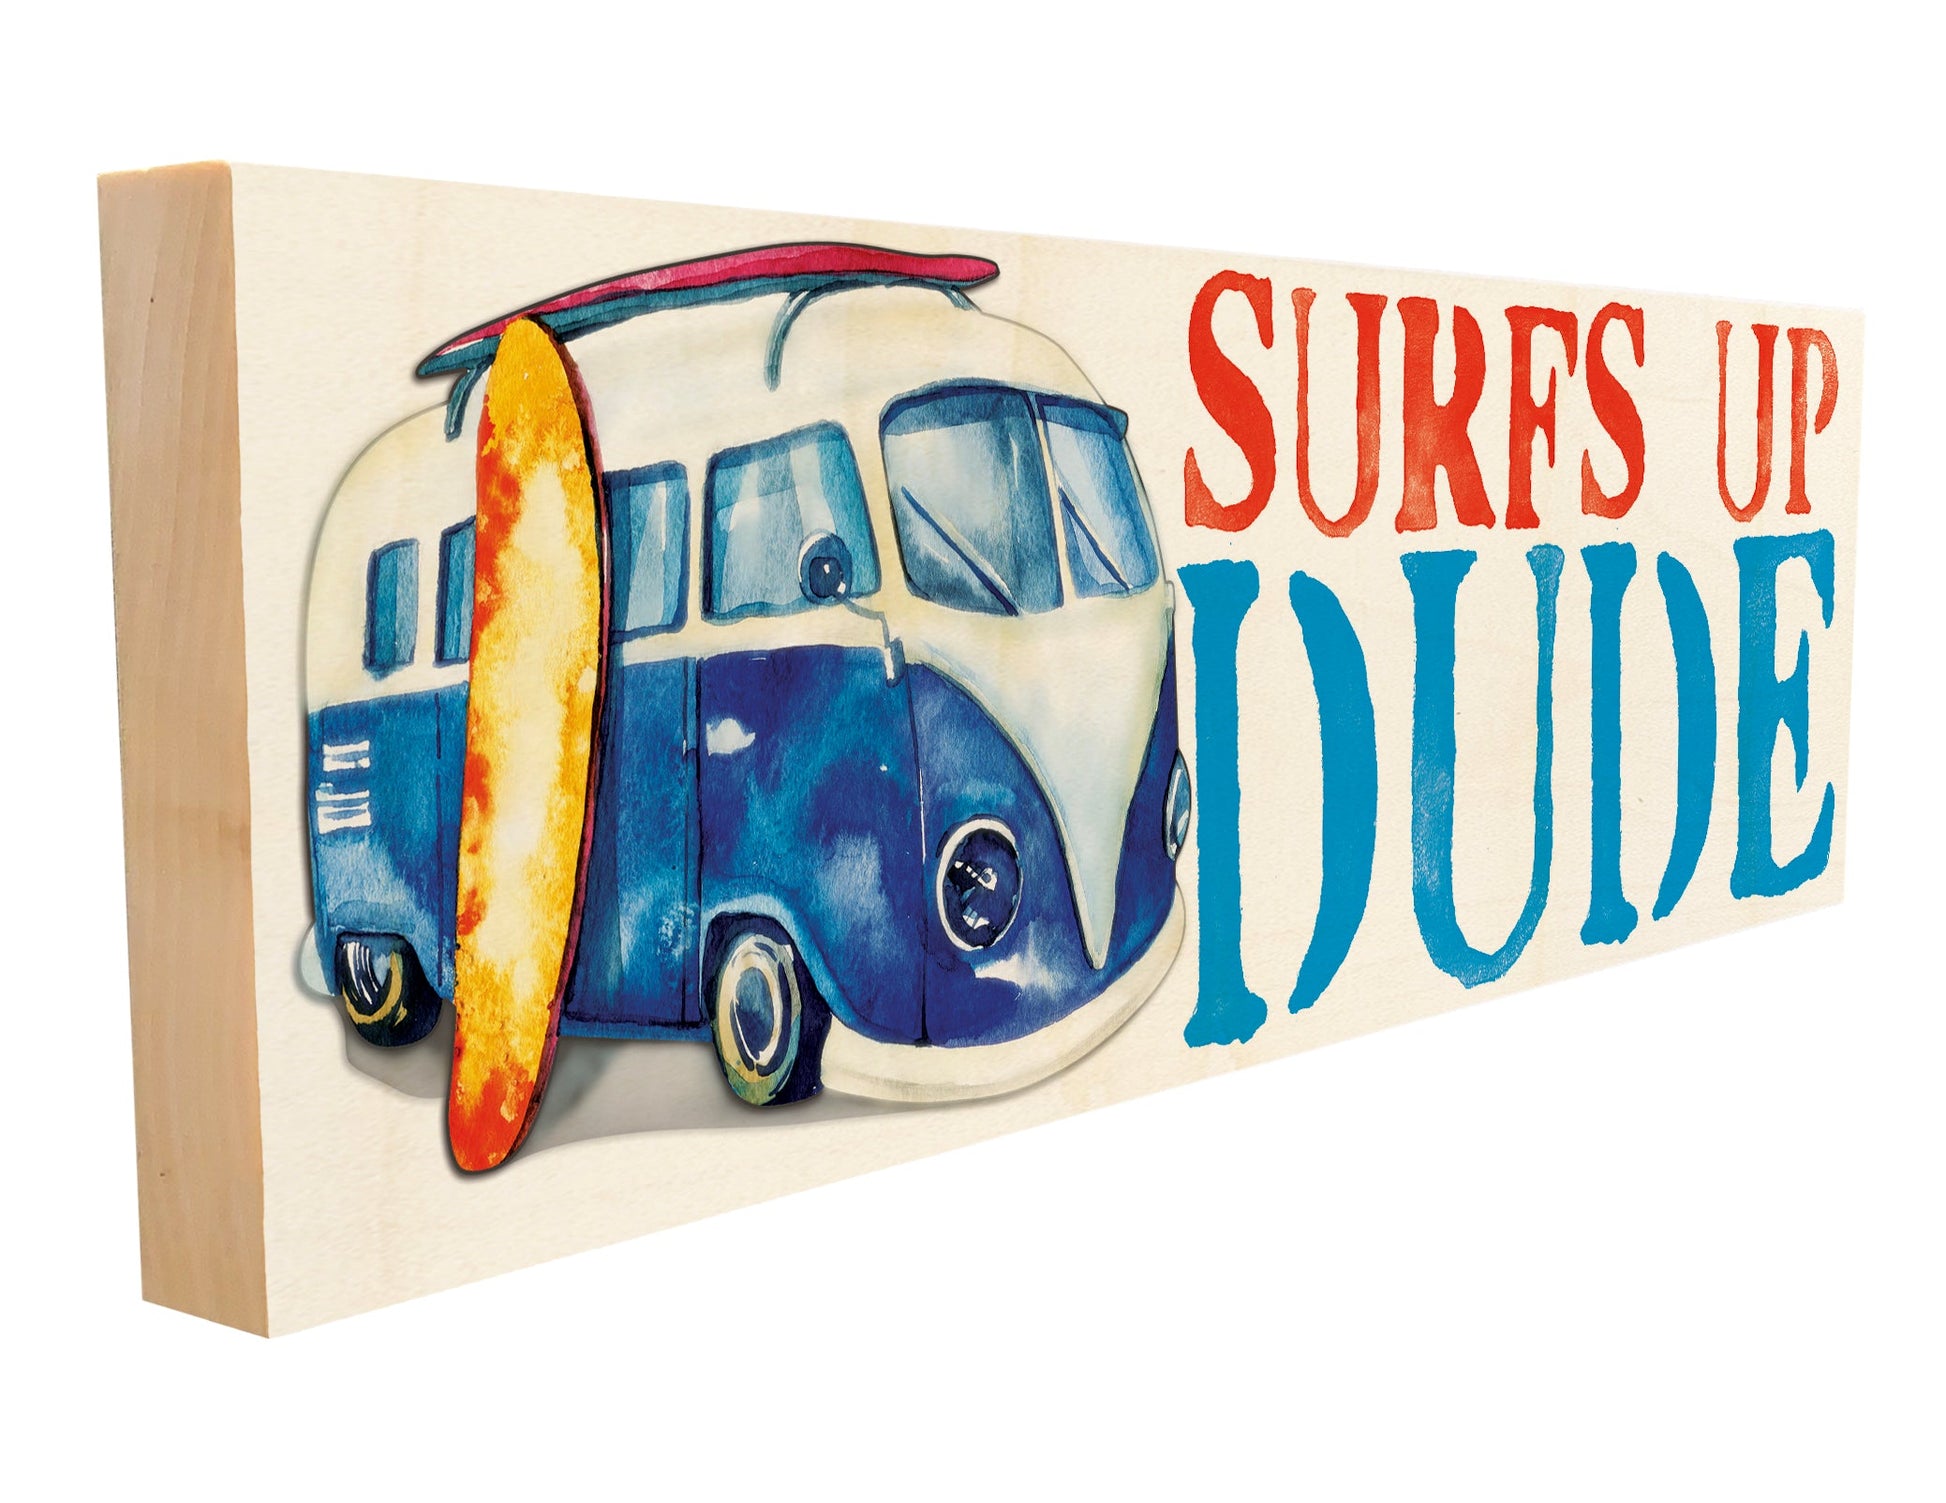 Surfs Up Dude.